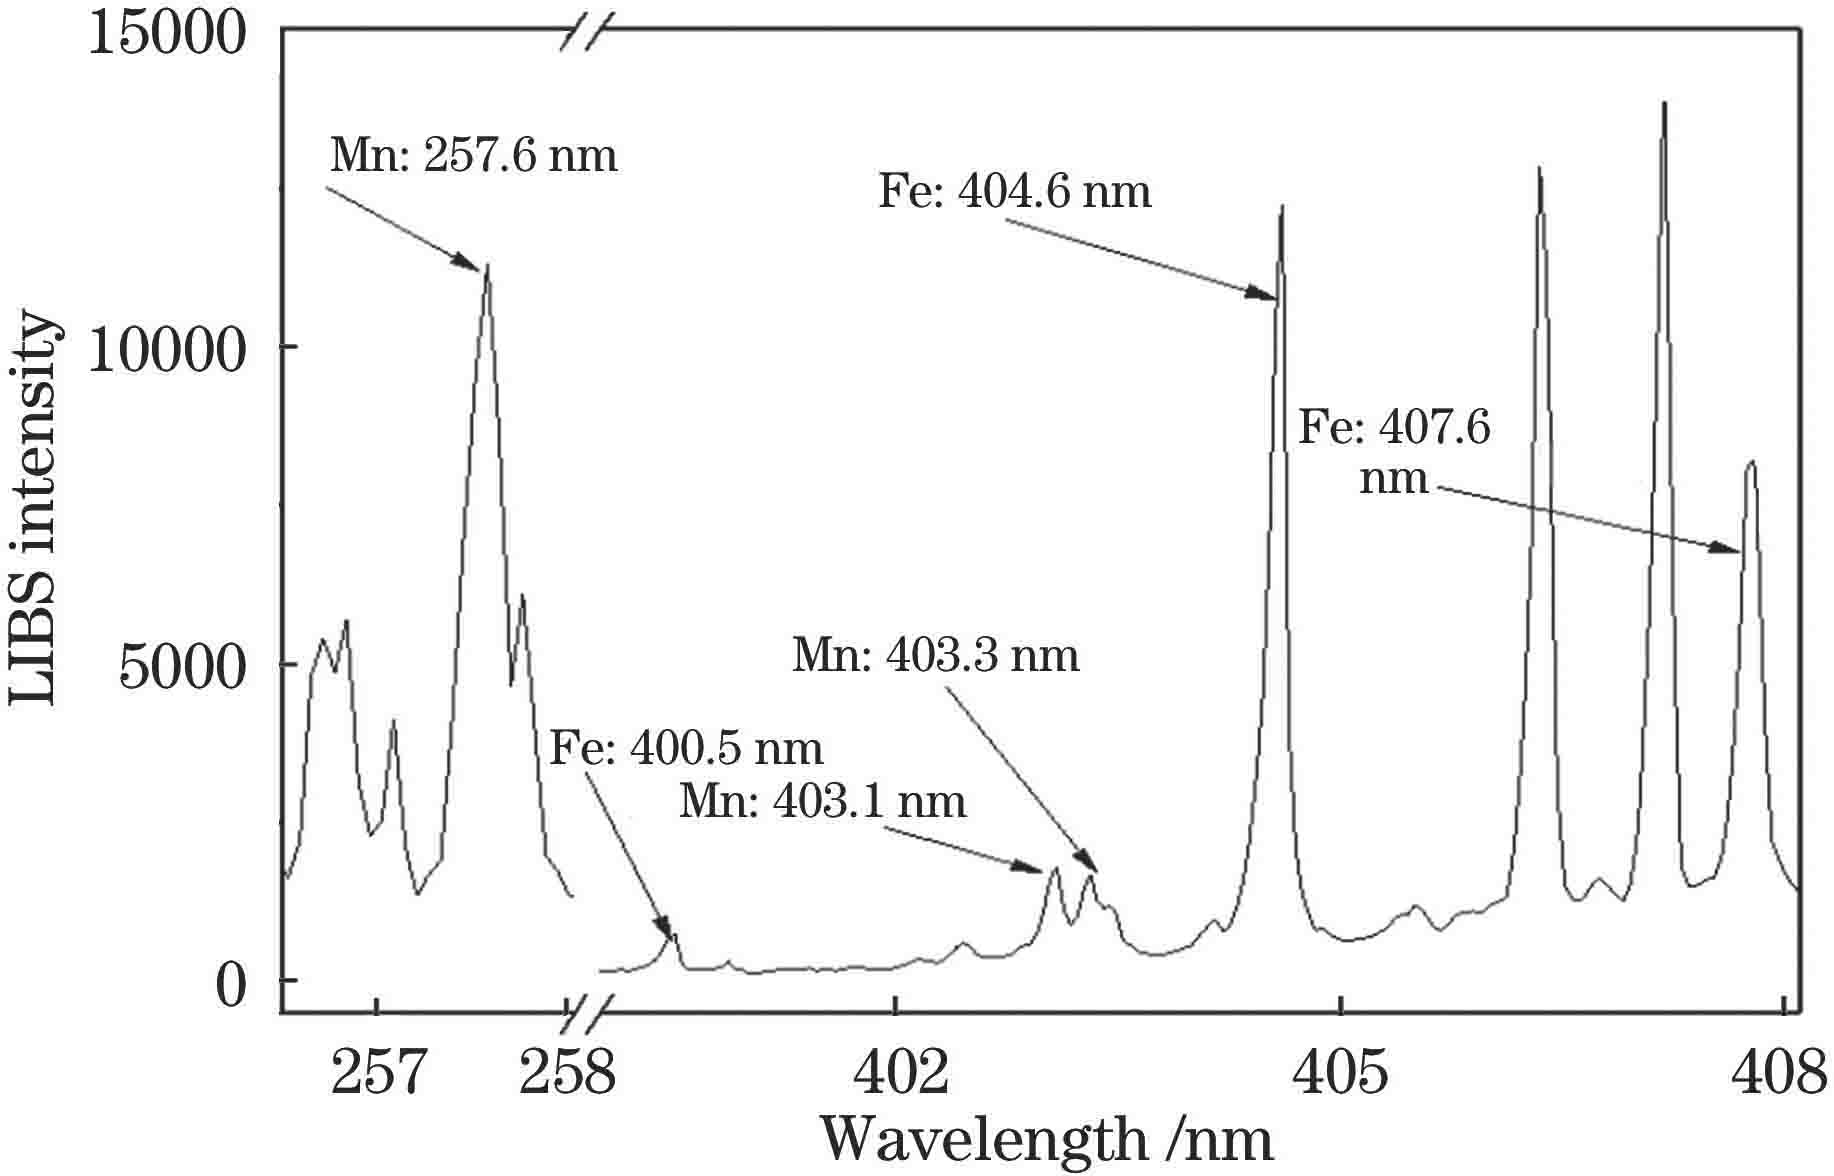 Mn element spectrum of No.1 soil sample